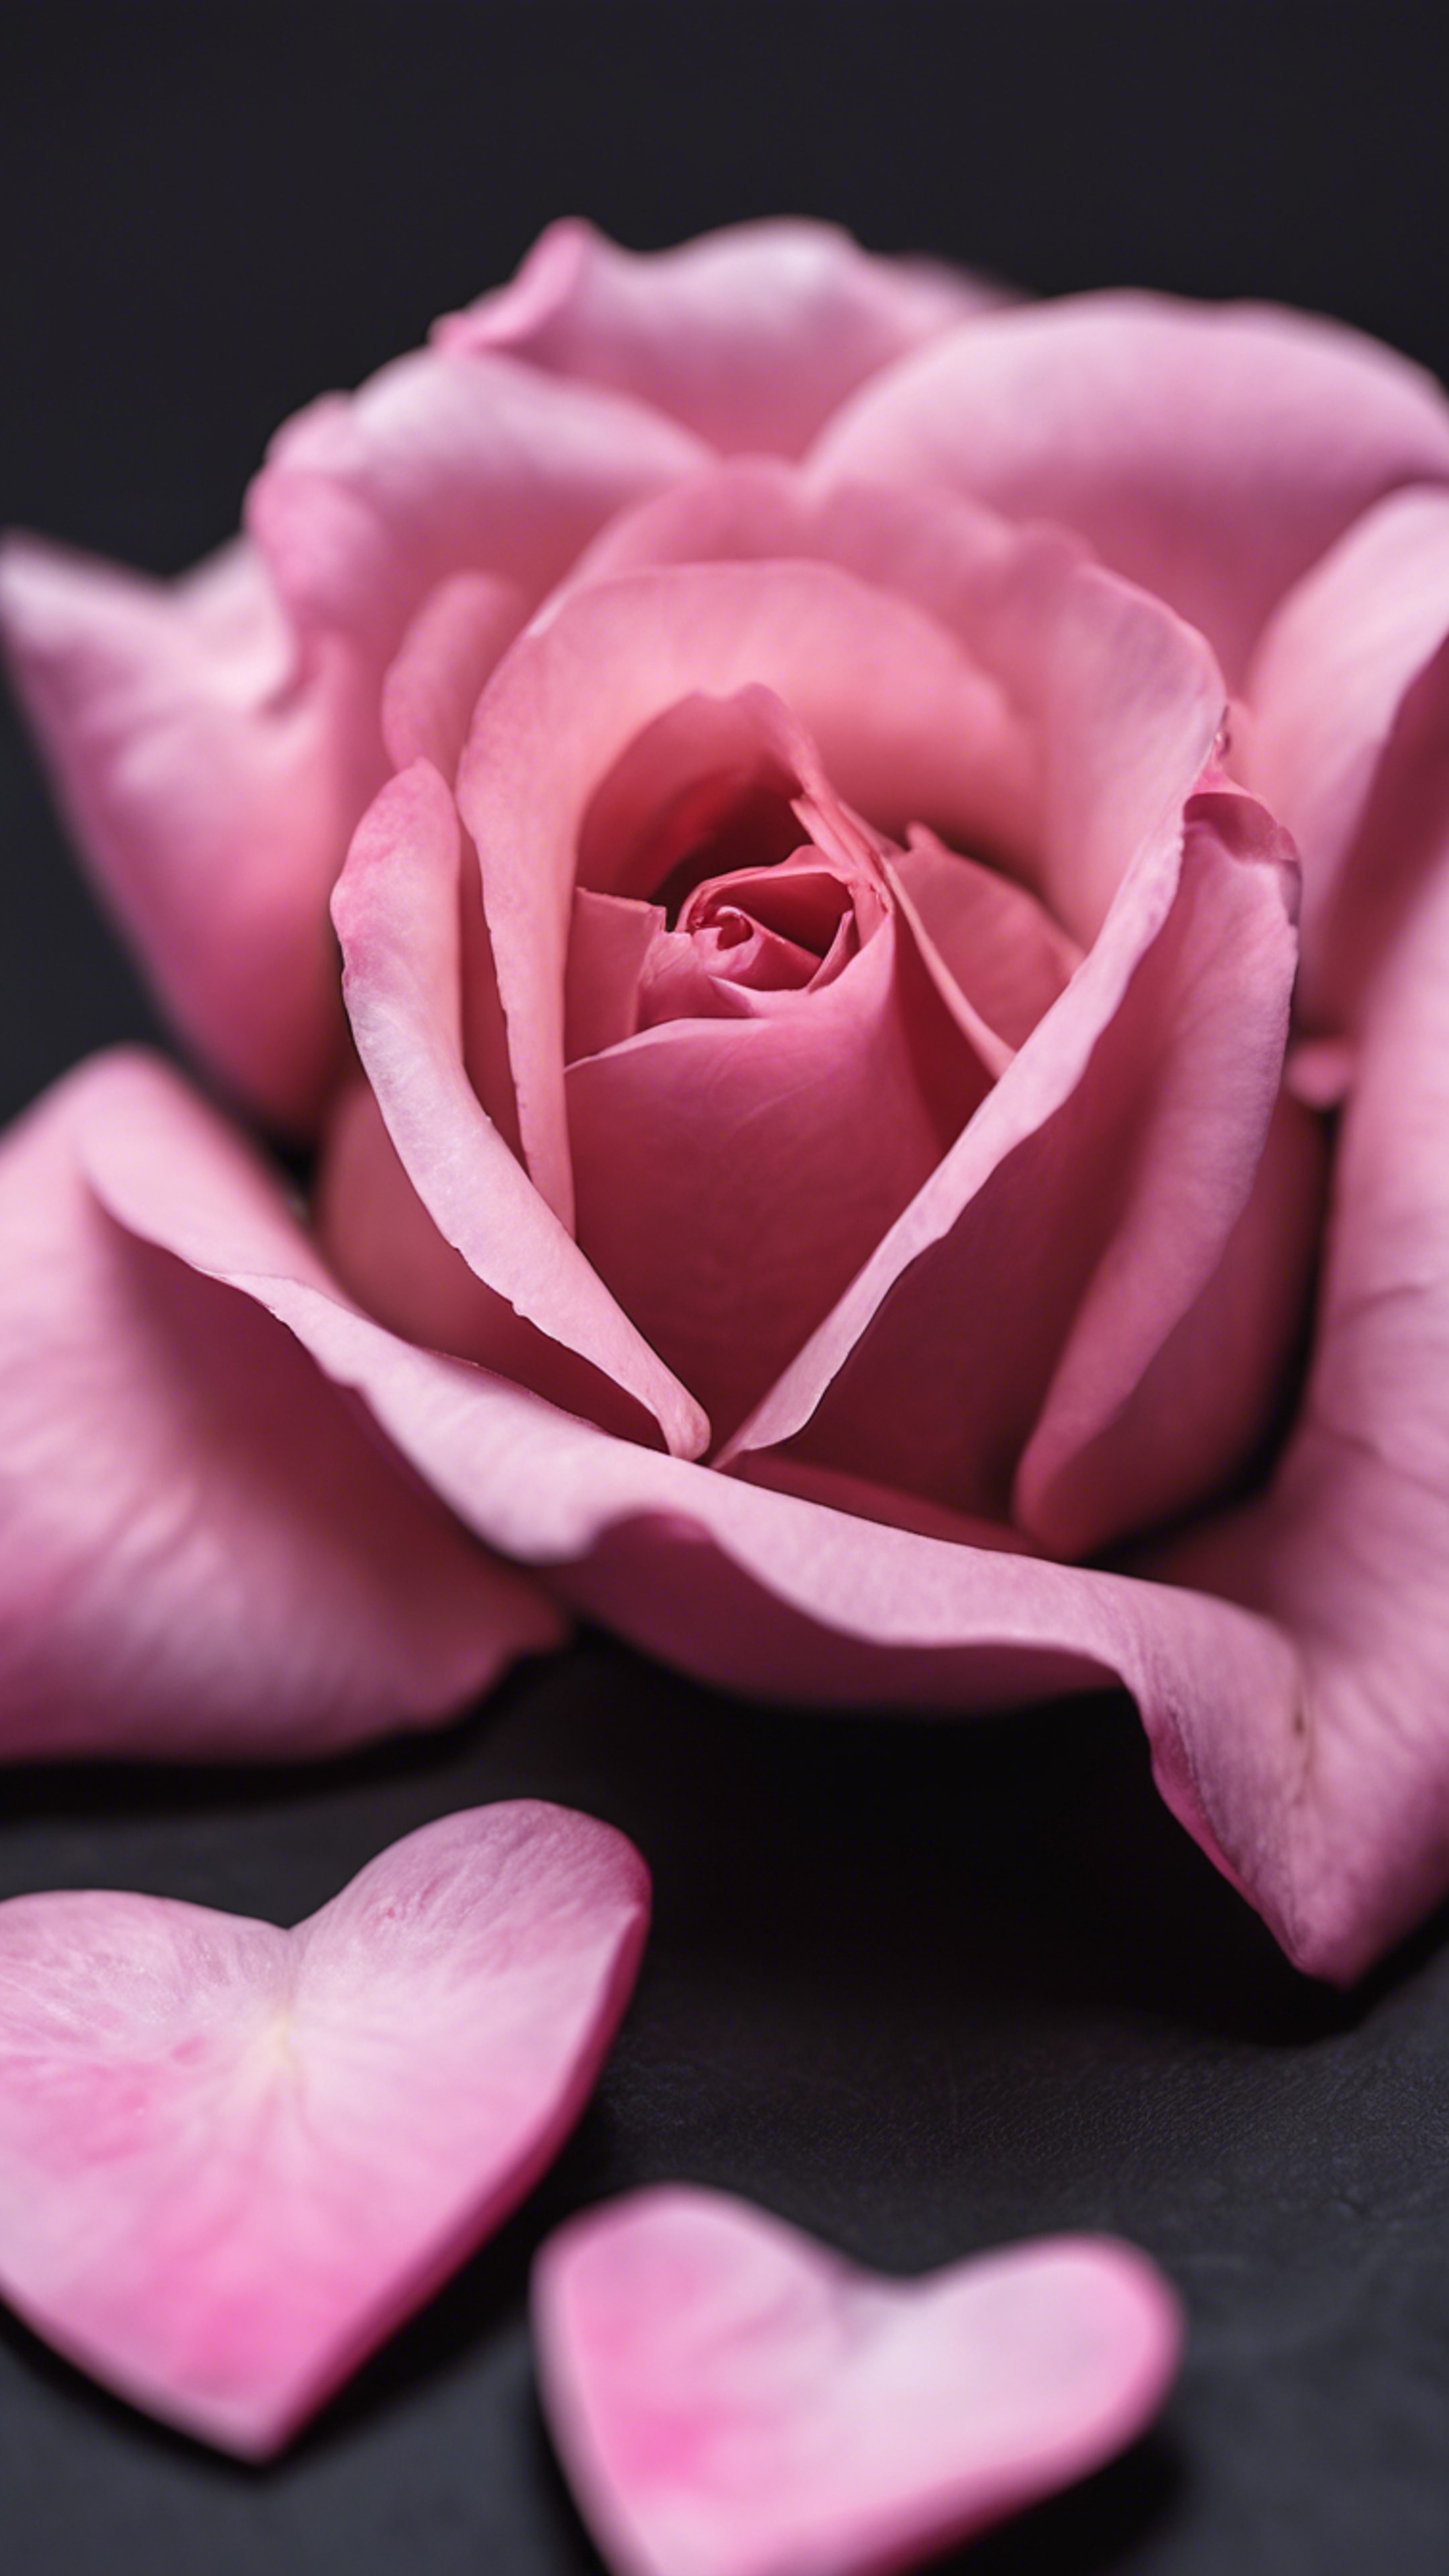 A single, perfect pink heart-shaped rose petal on a black table. Tapéta[a14a0e64e3fd4358915b]